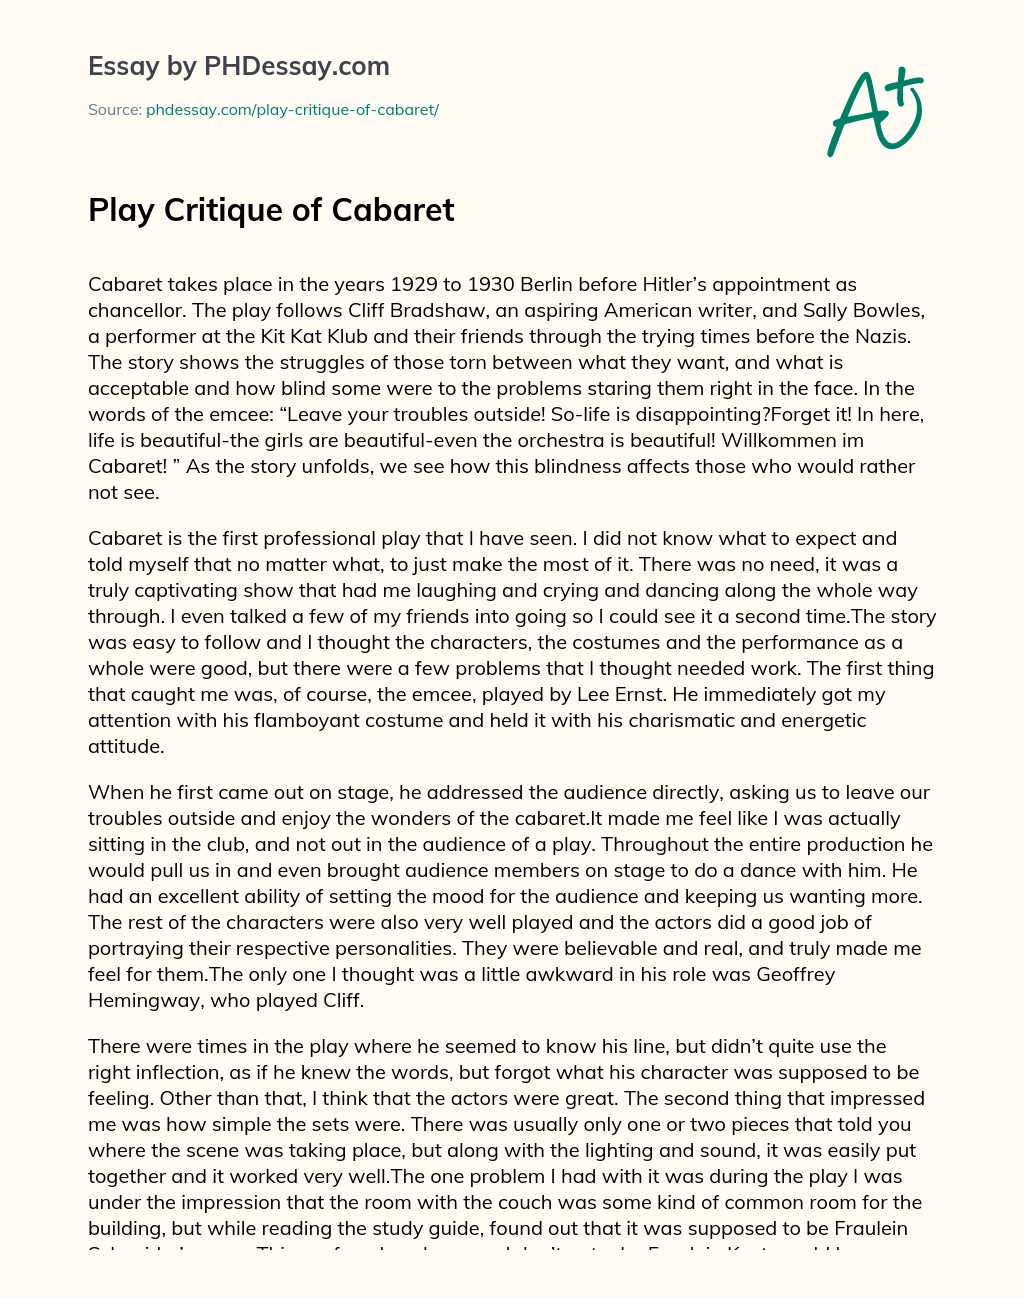 Play Critique of Cabaret essay